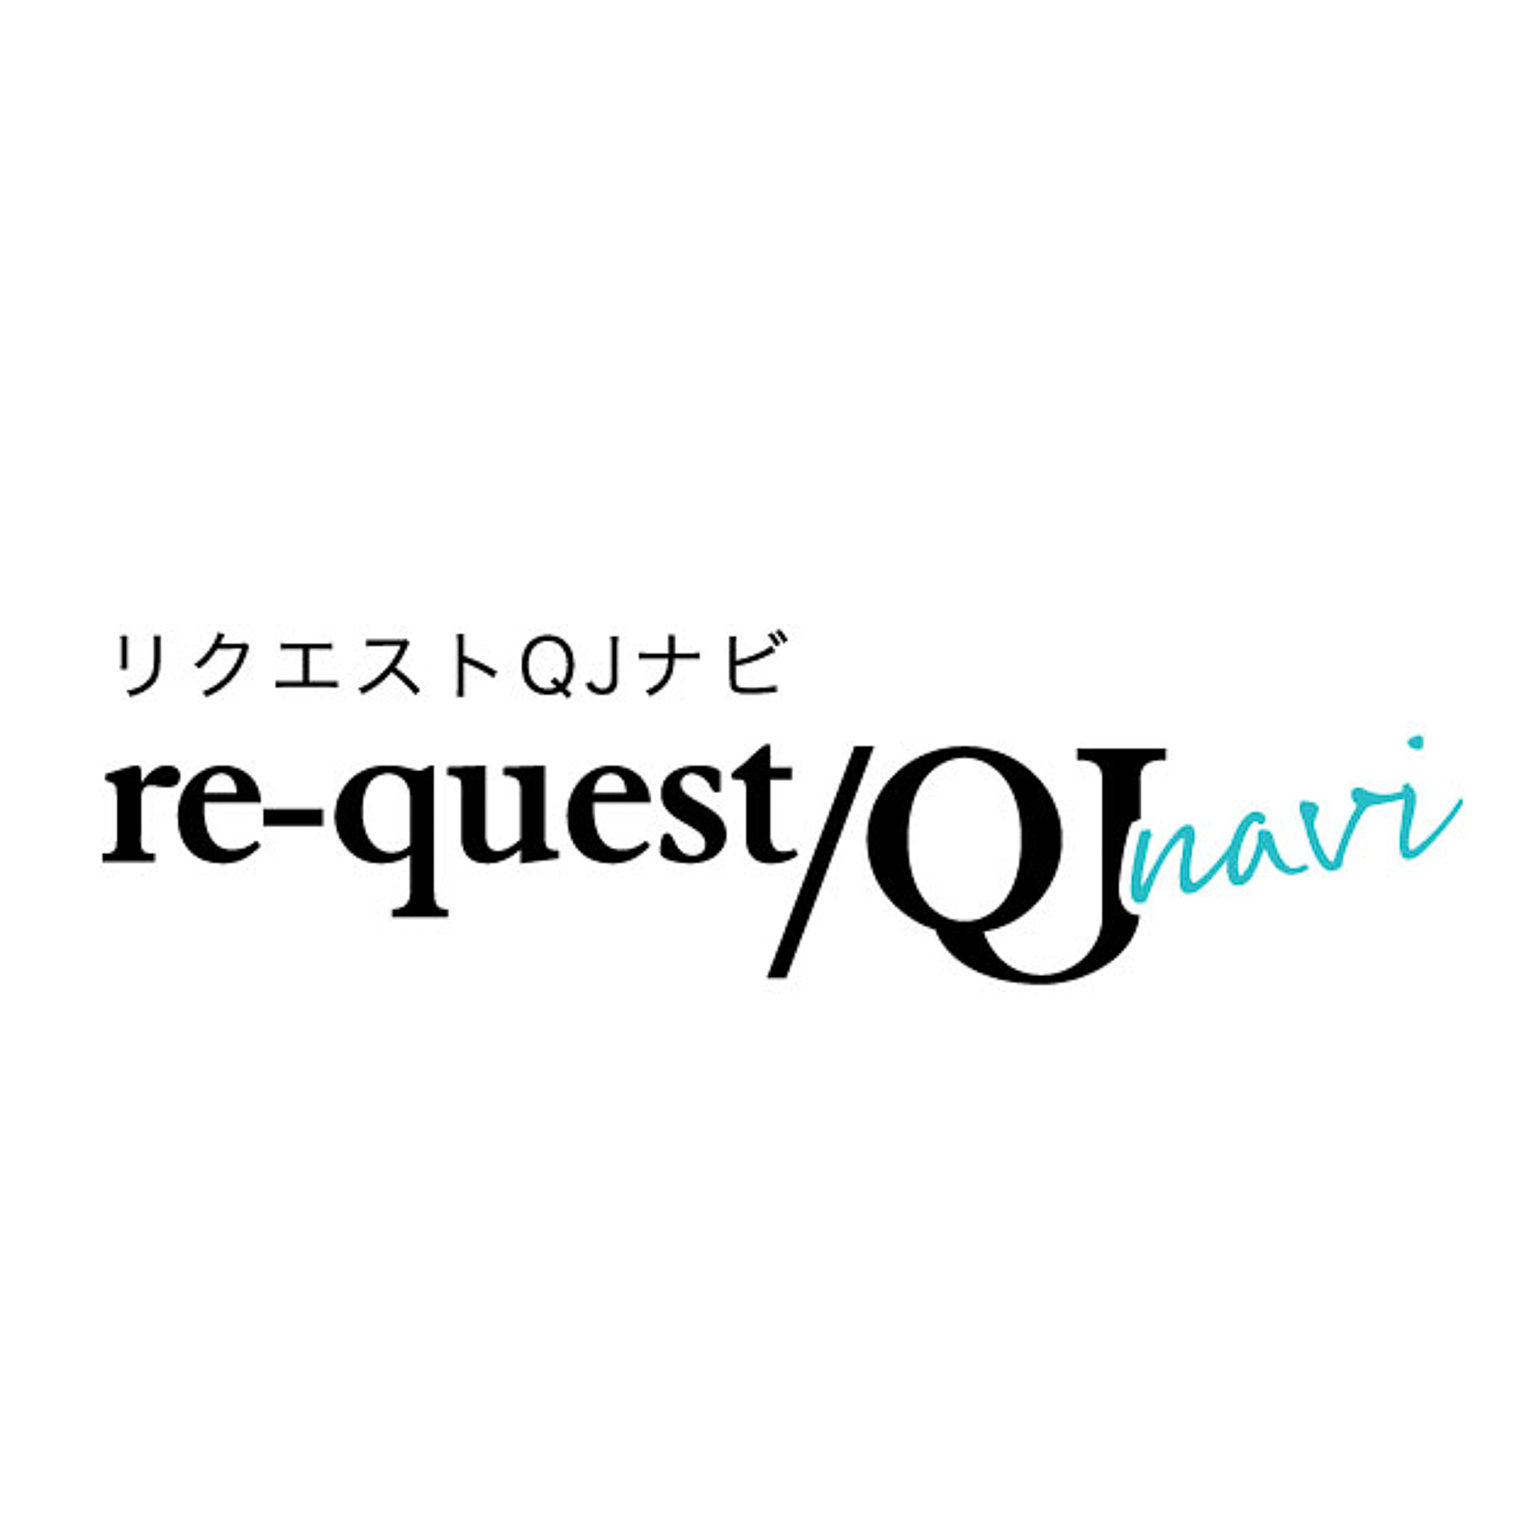 re-quest/QJ navi